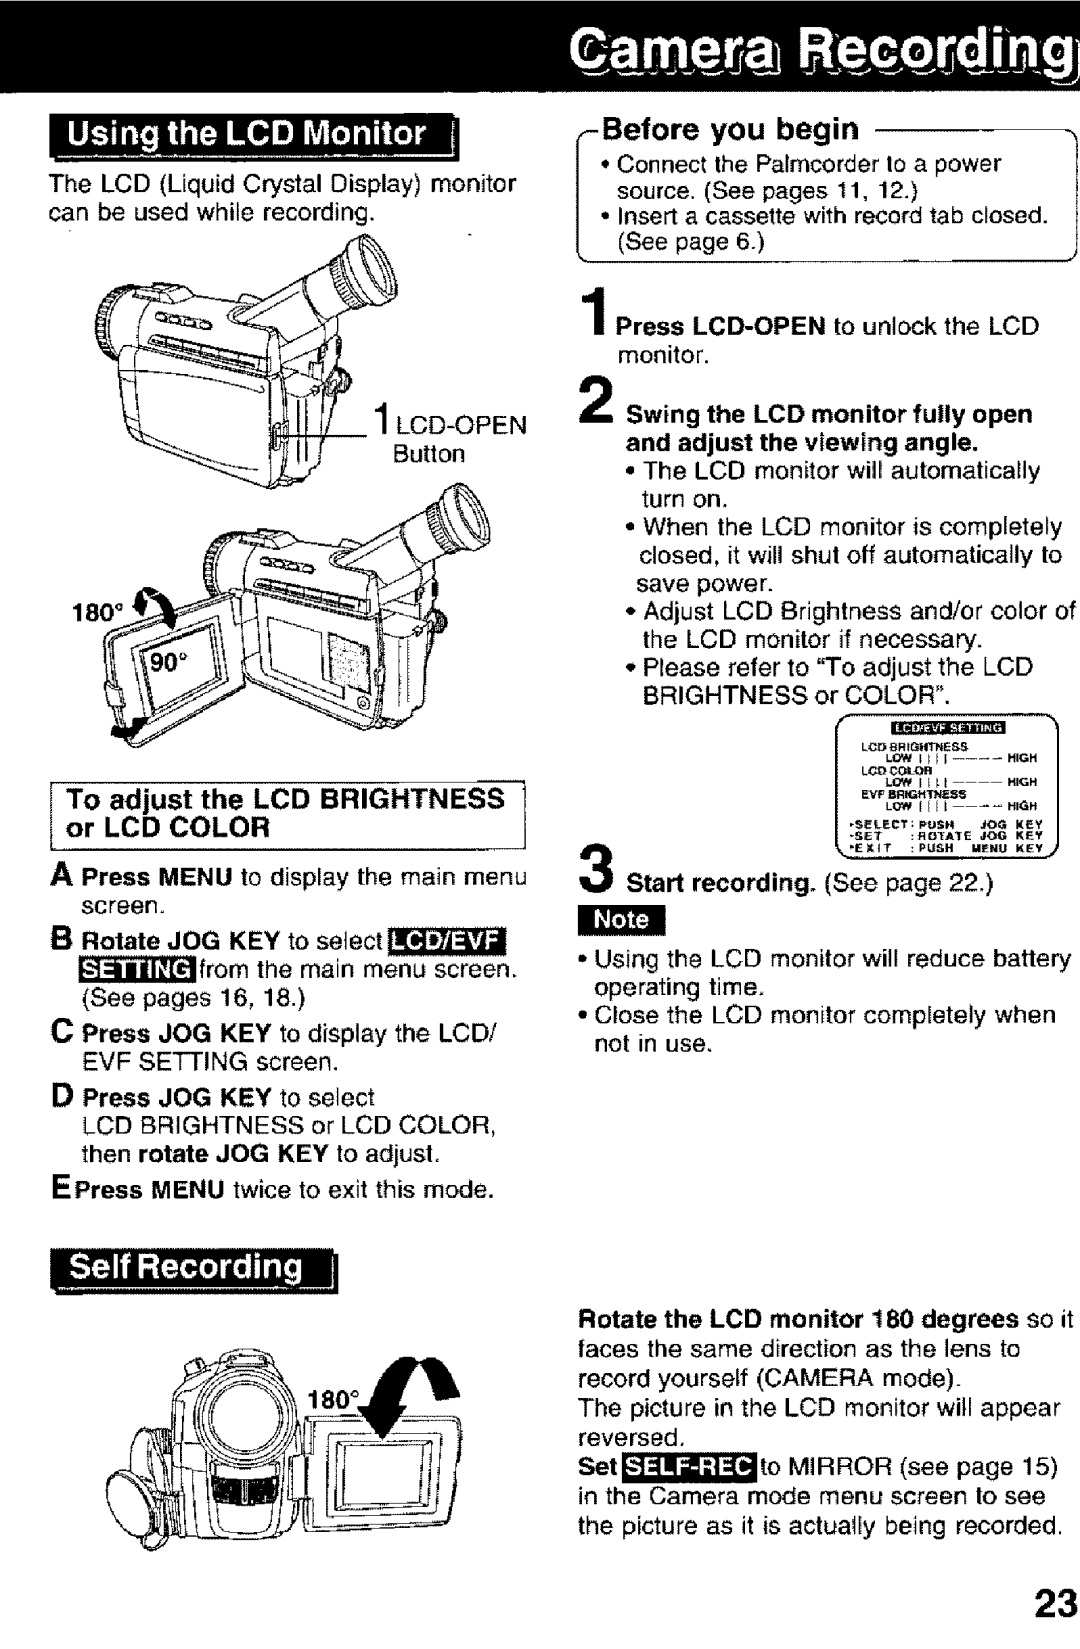 Panasonic PV-DV101 manual t i li-,=.w,!m,mml, Before you begin, Start recording. See page 